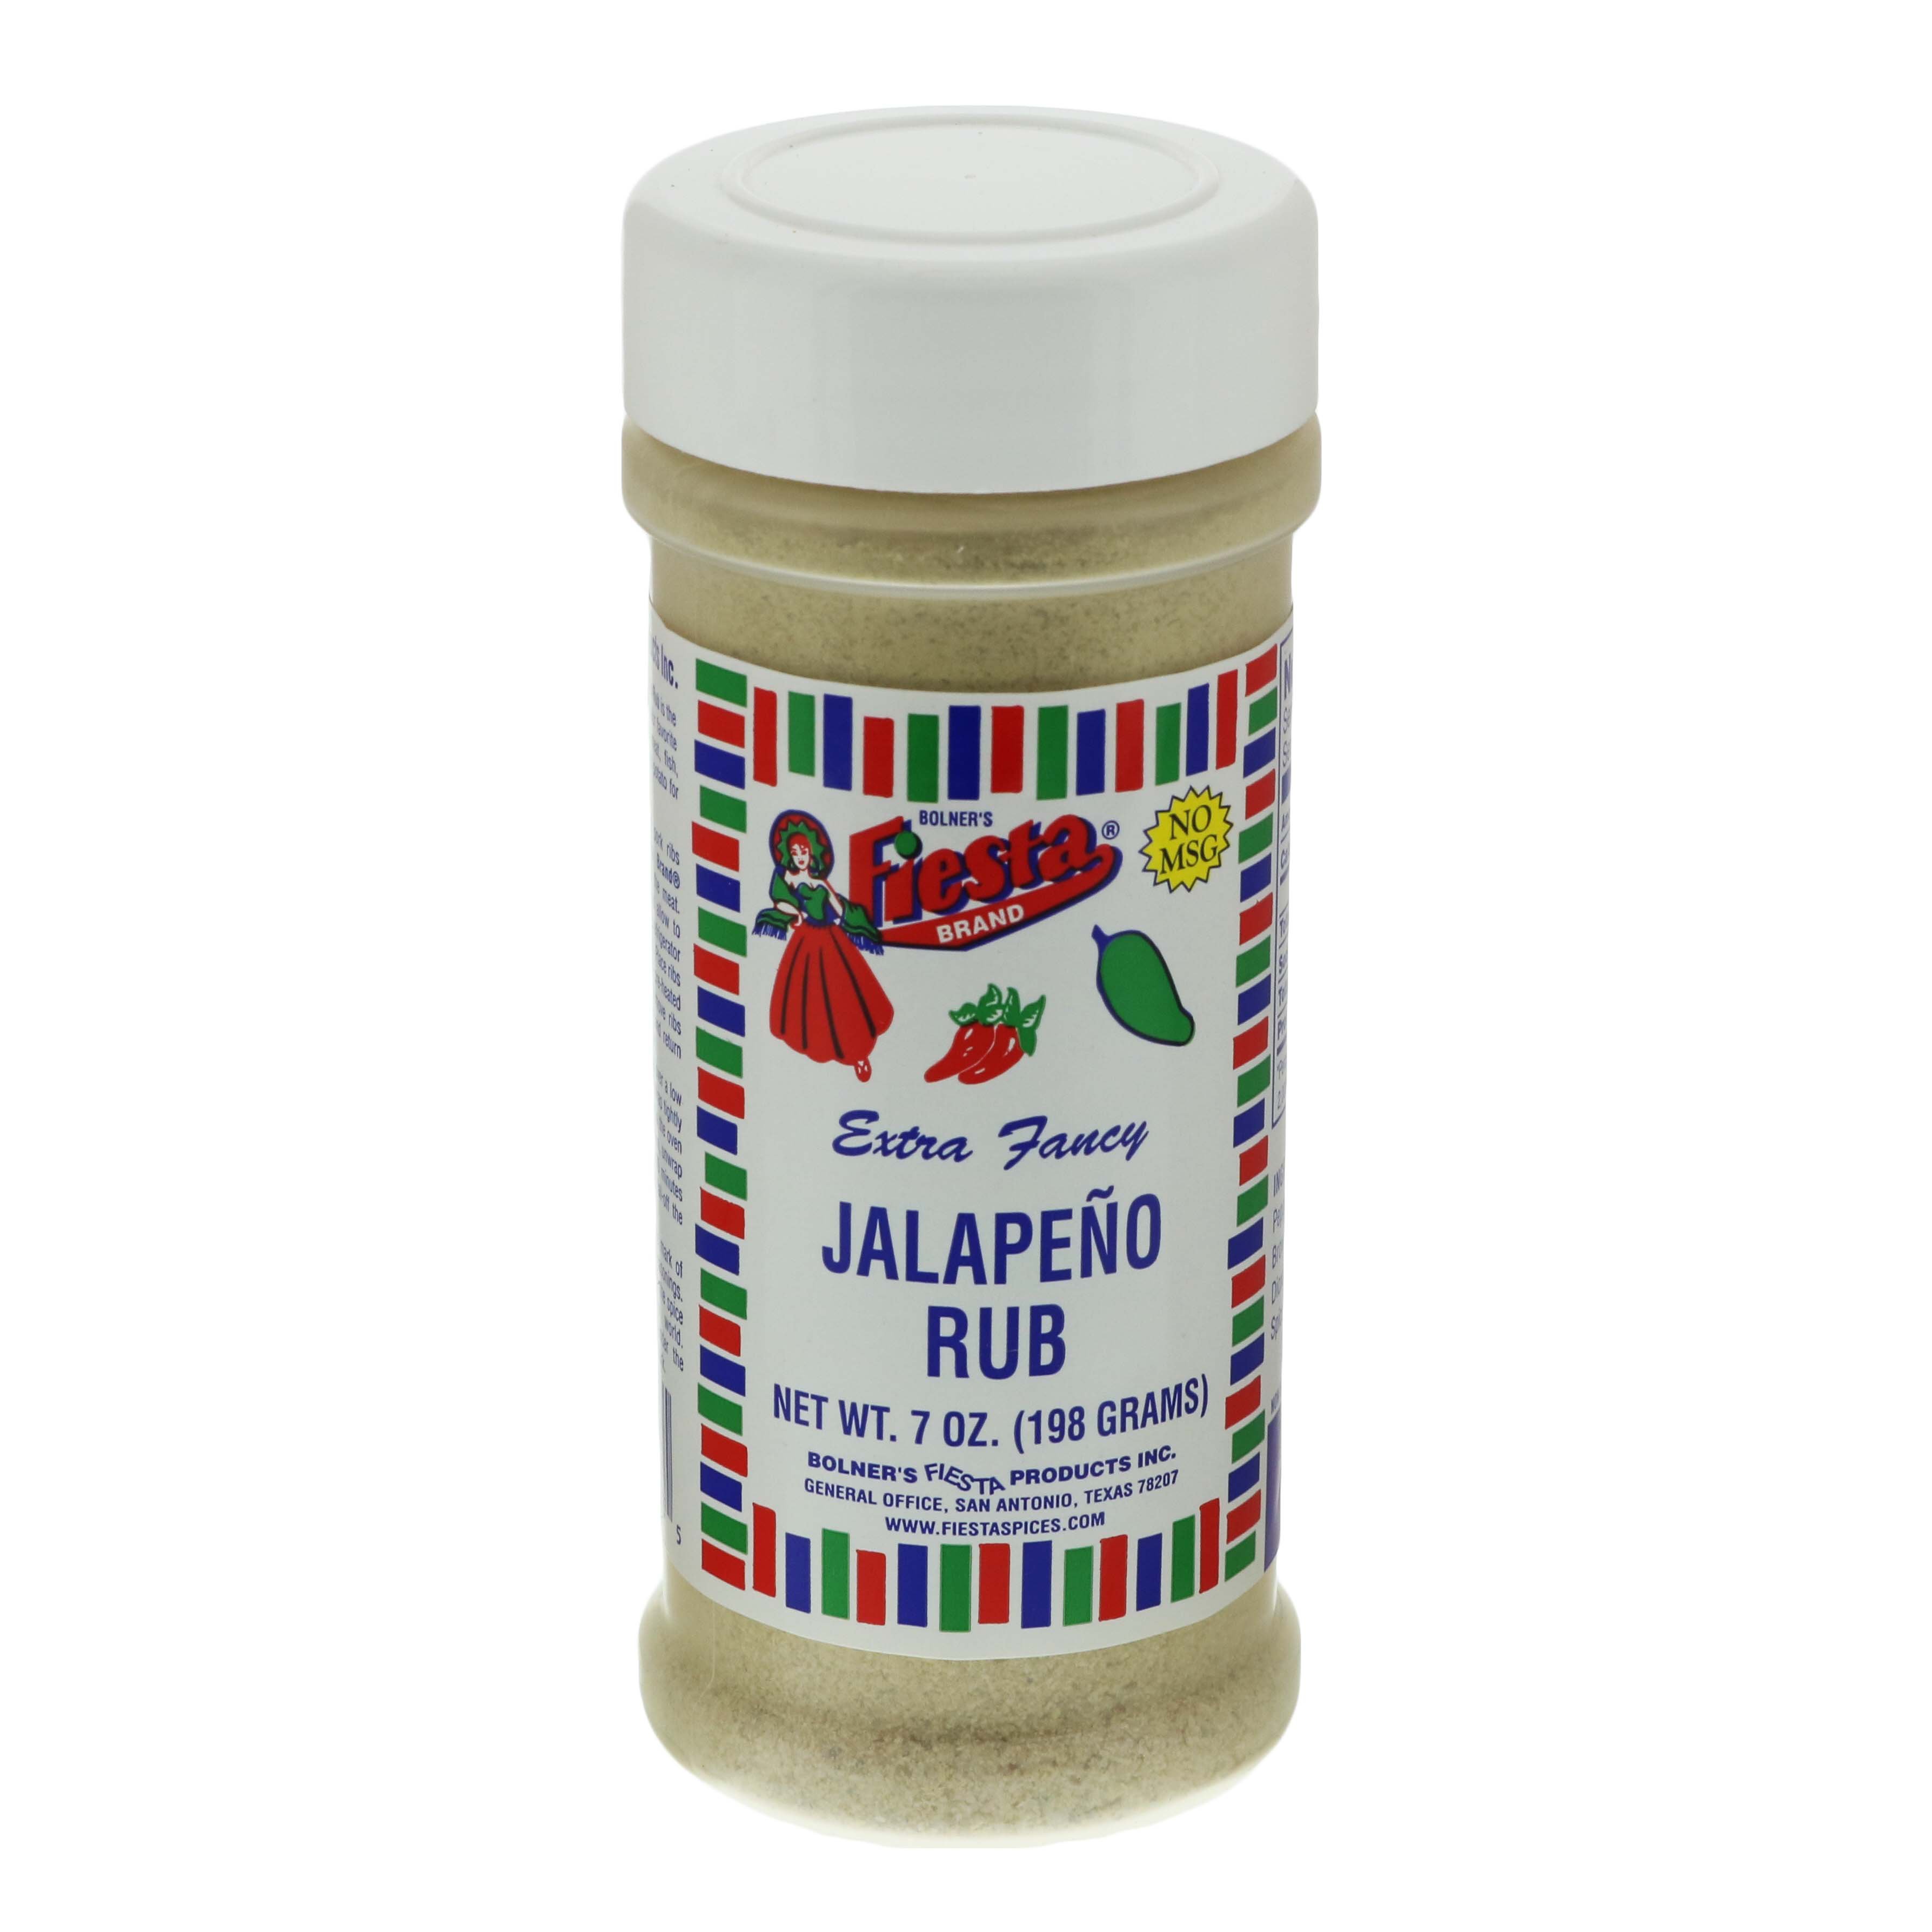 Bolner's Fiesta Jalapeno Rub - Shop Herbs & Spices at H-E-B